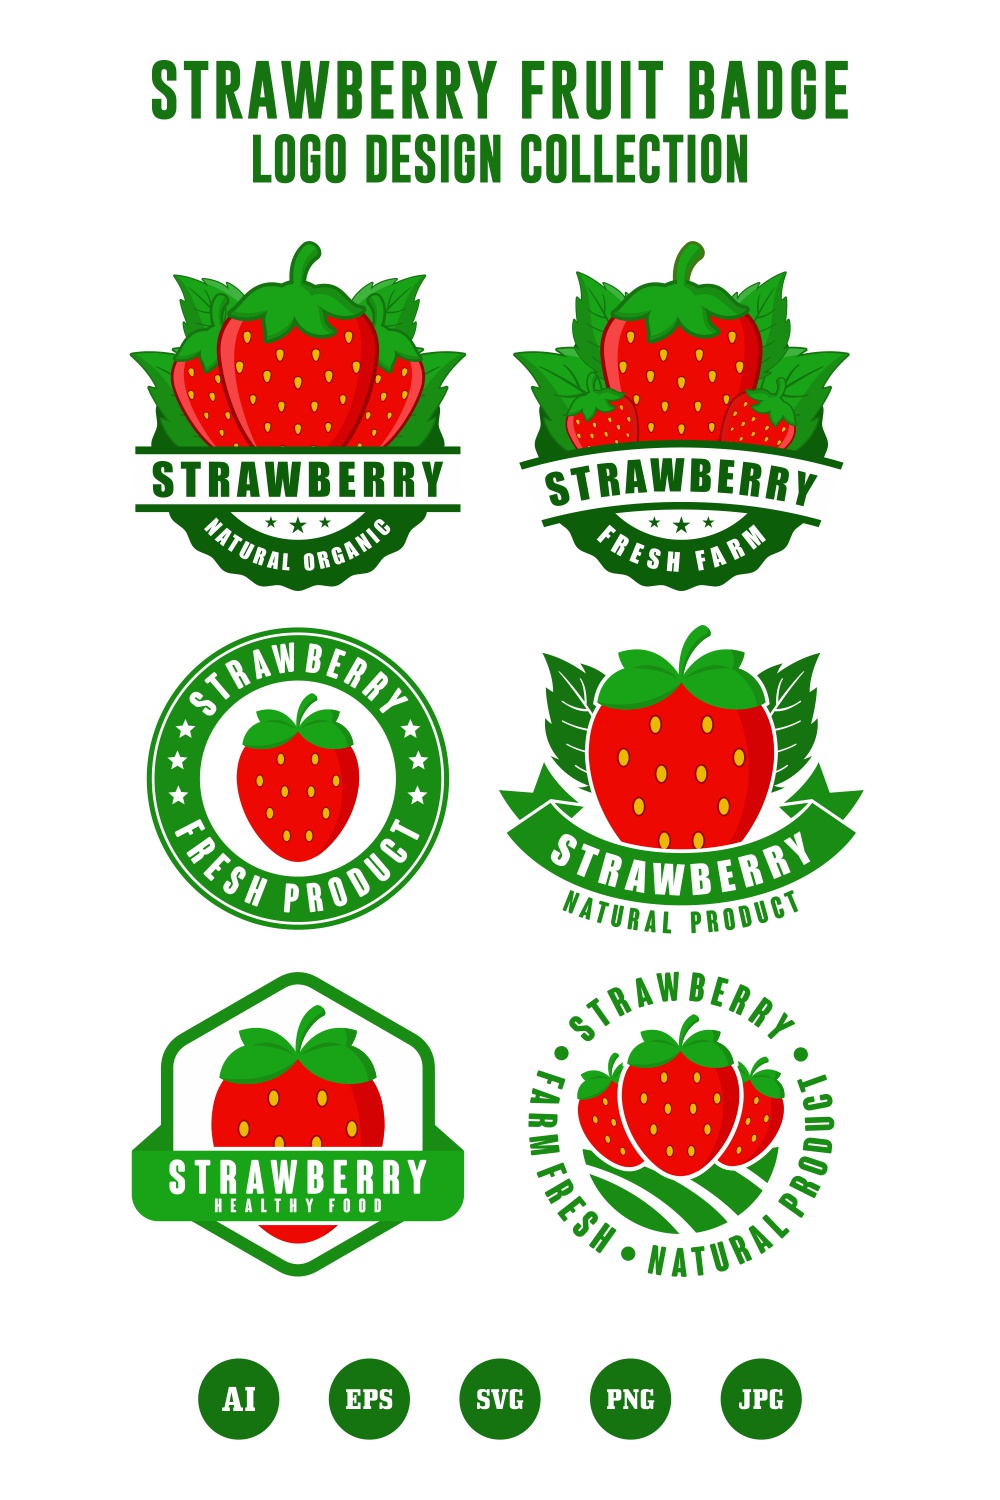 Set Strawberry fruit badge logo design collection - $6 pinterest preview image.